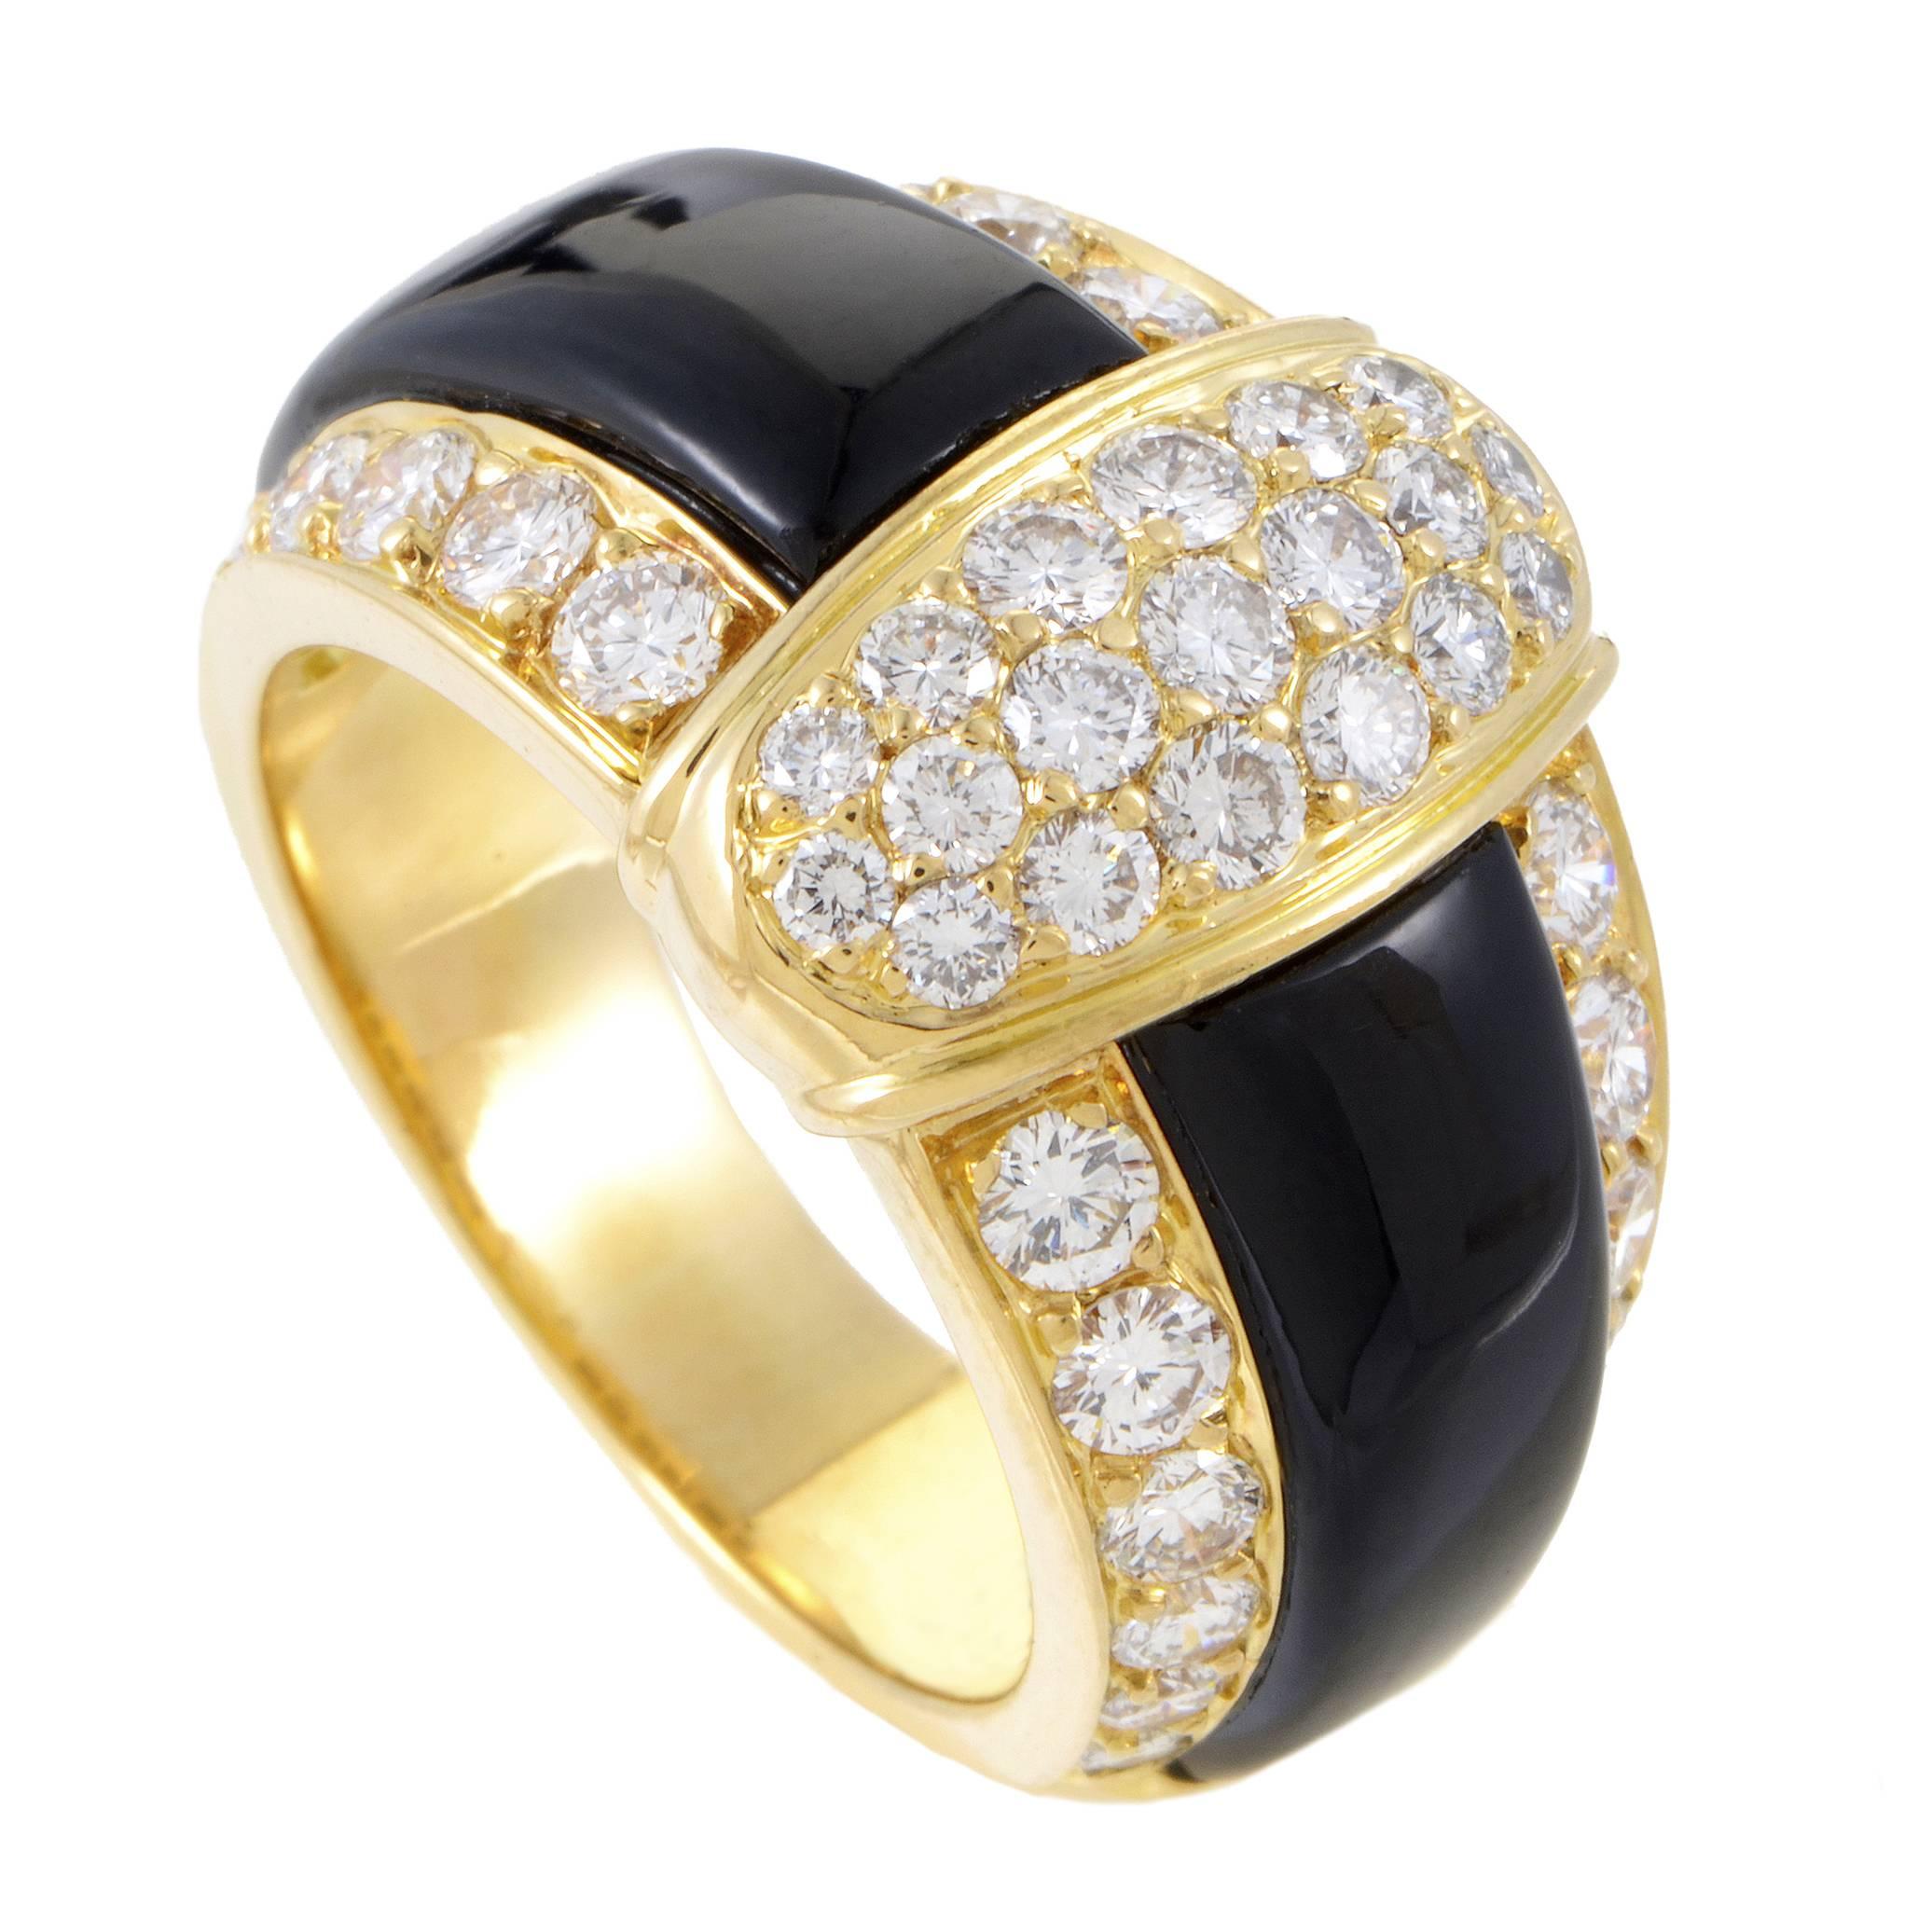 Van Cleef & Arpels Onyx Diamond Gold Band Ring